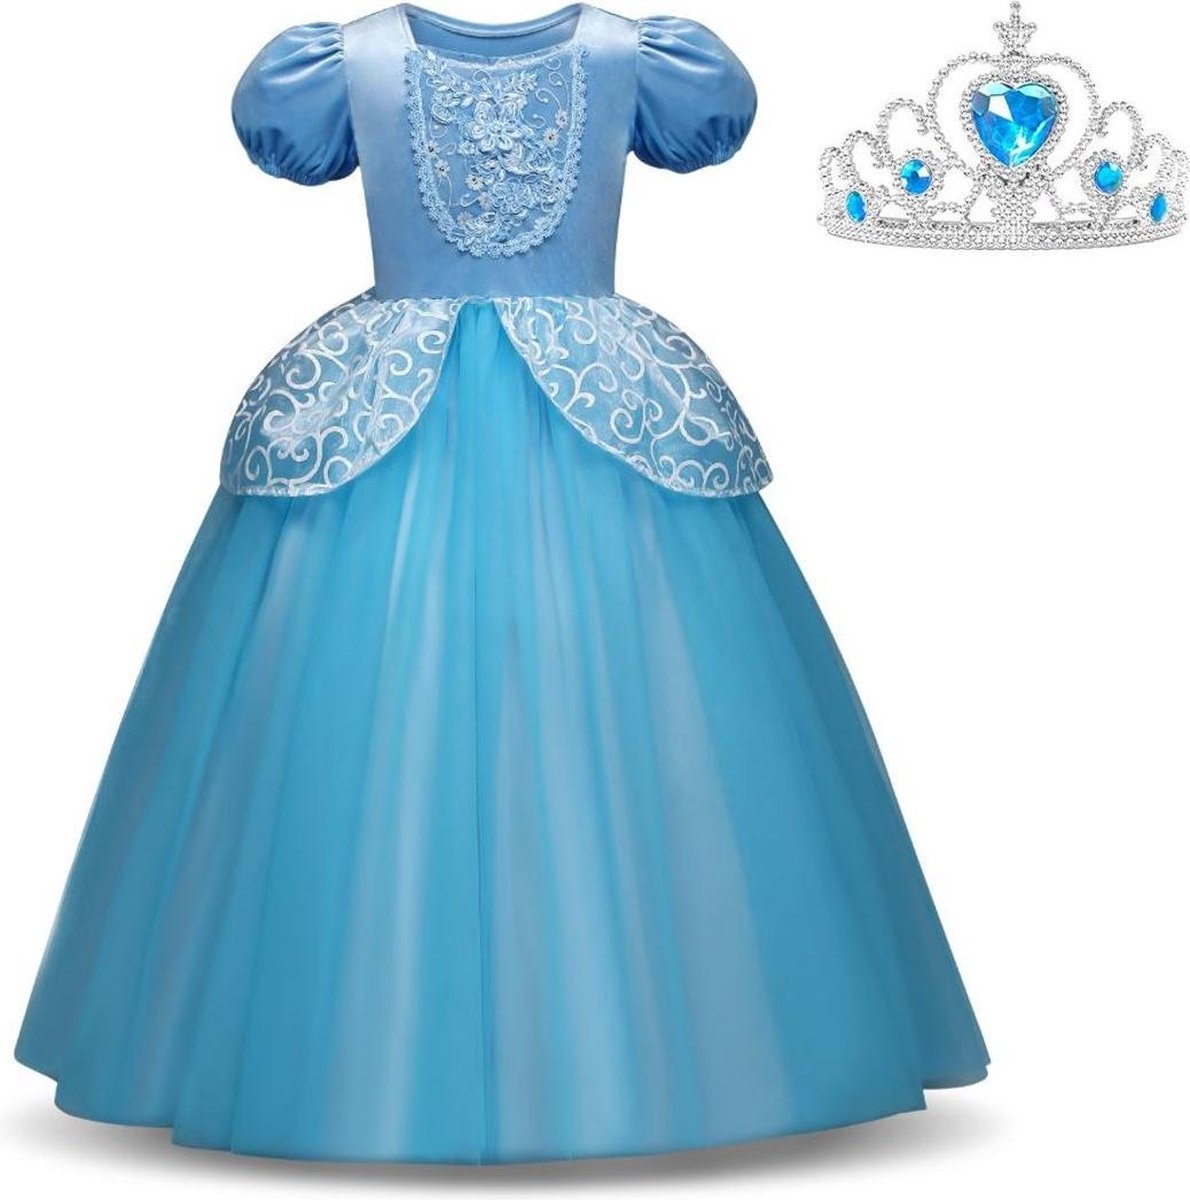 Assepoester jurk Deluxe Prinsessen jurk verkleedjurk 116-122 (120) blauw + blauwe kroon